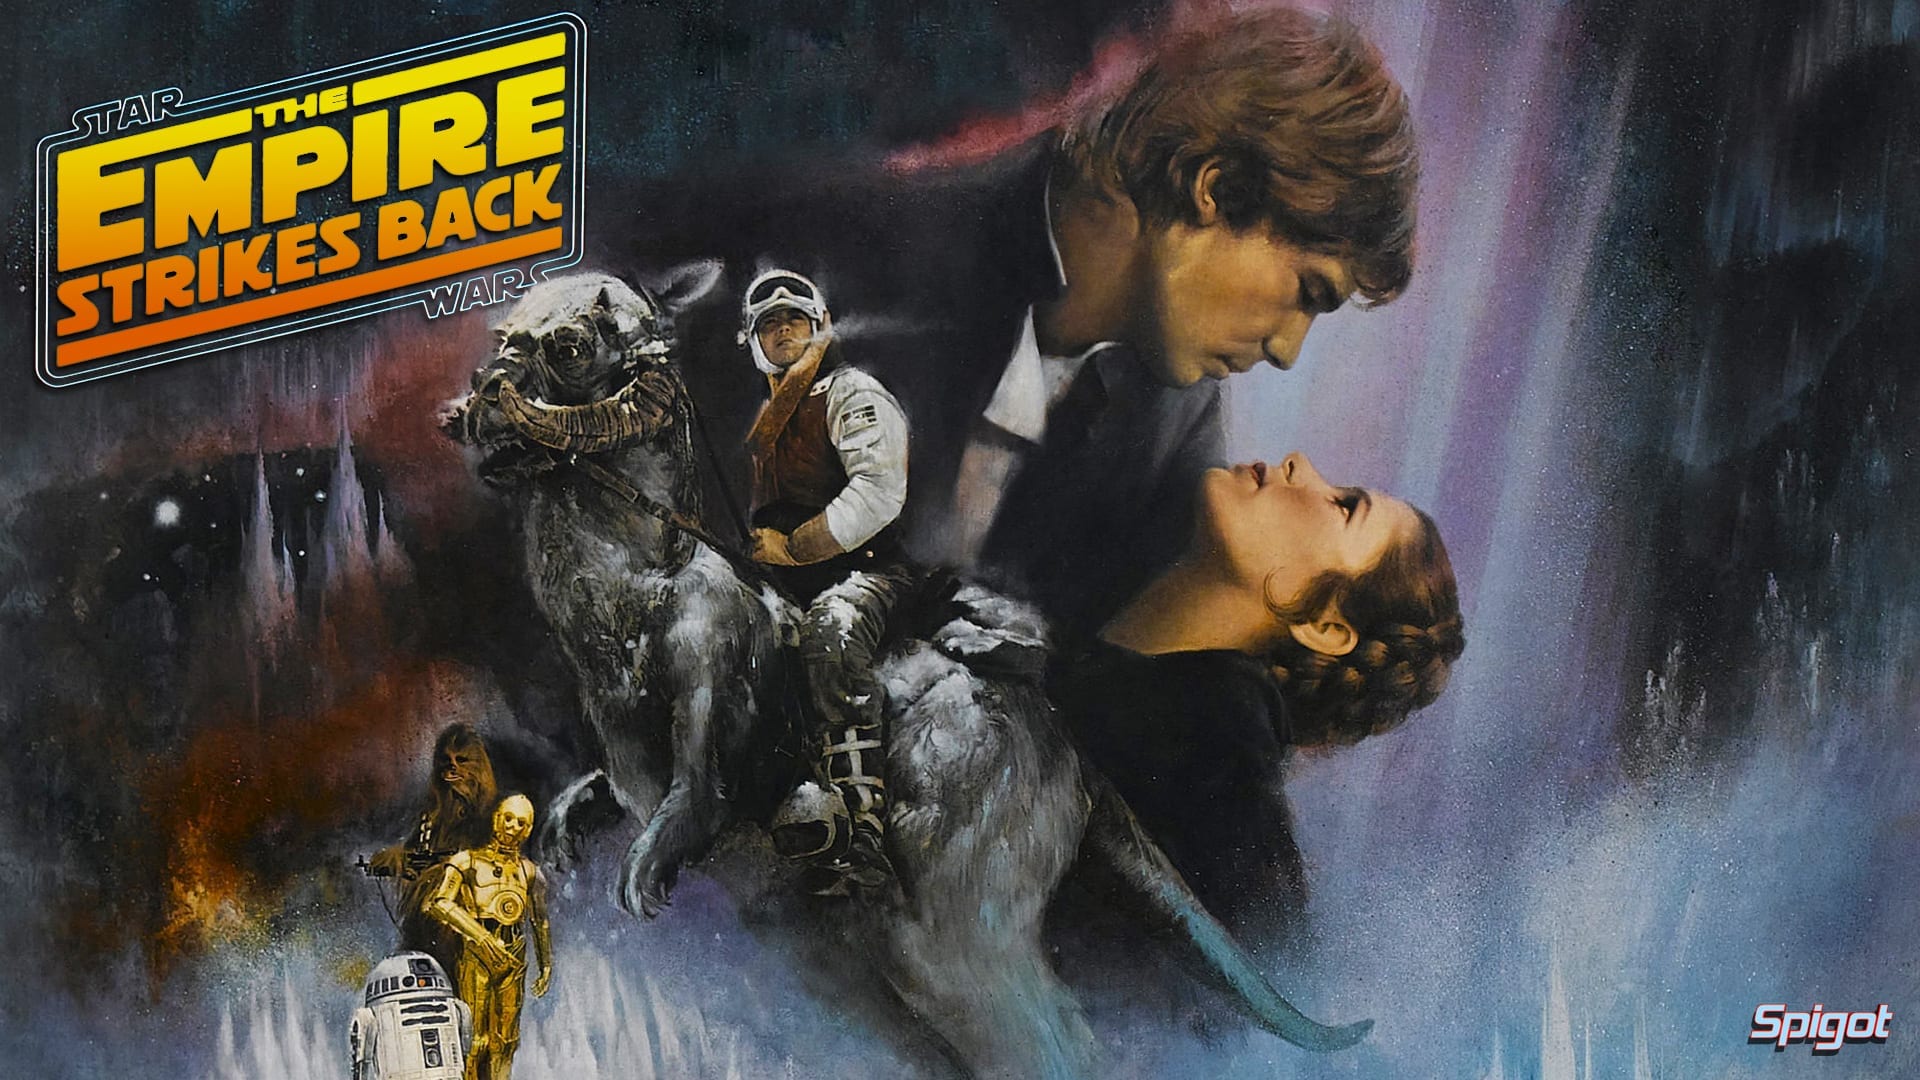 Film Review: Star Wars Episode V – The Empire Strikes Back